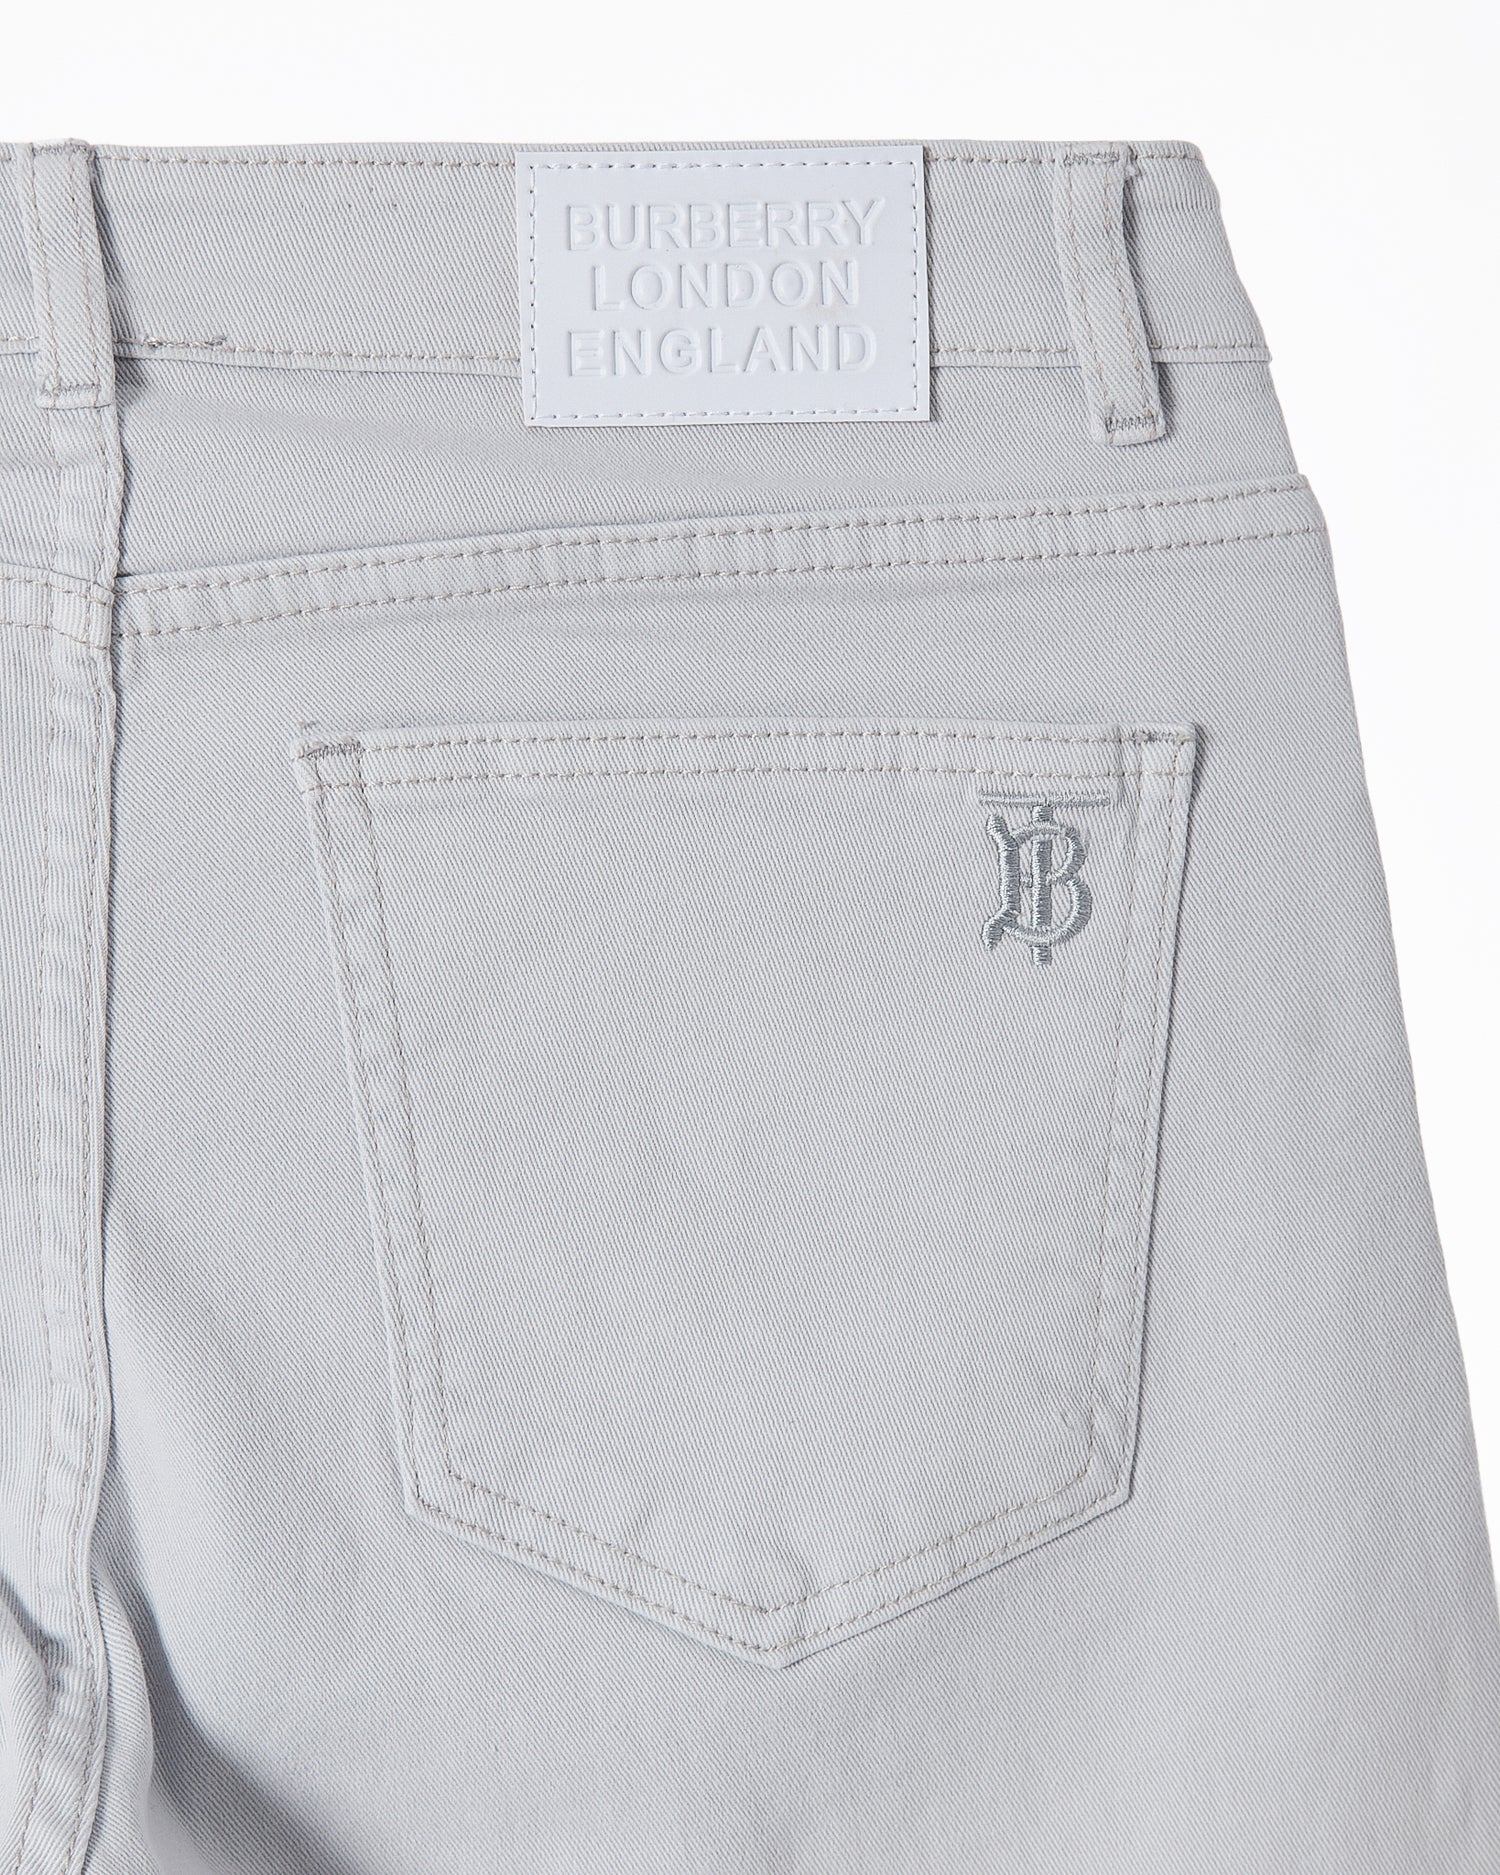 BUR TB Embroidered Men White Slim Fit Jeans 25.90